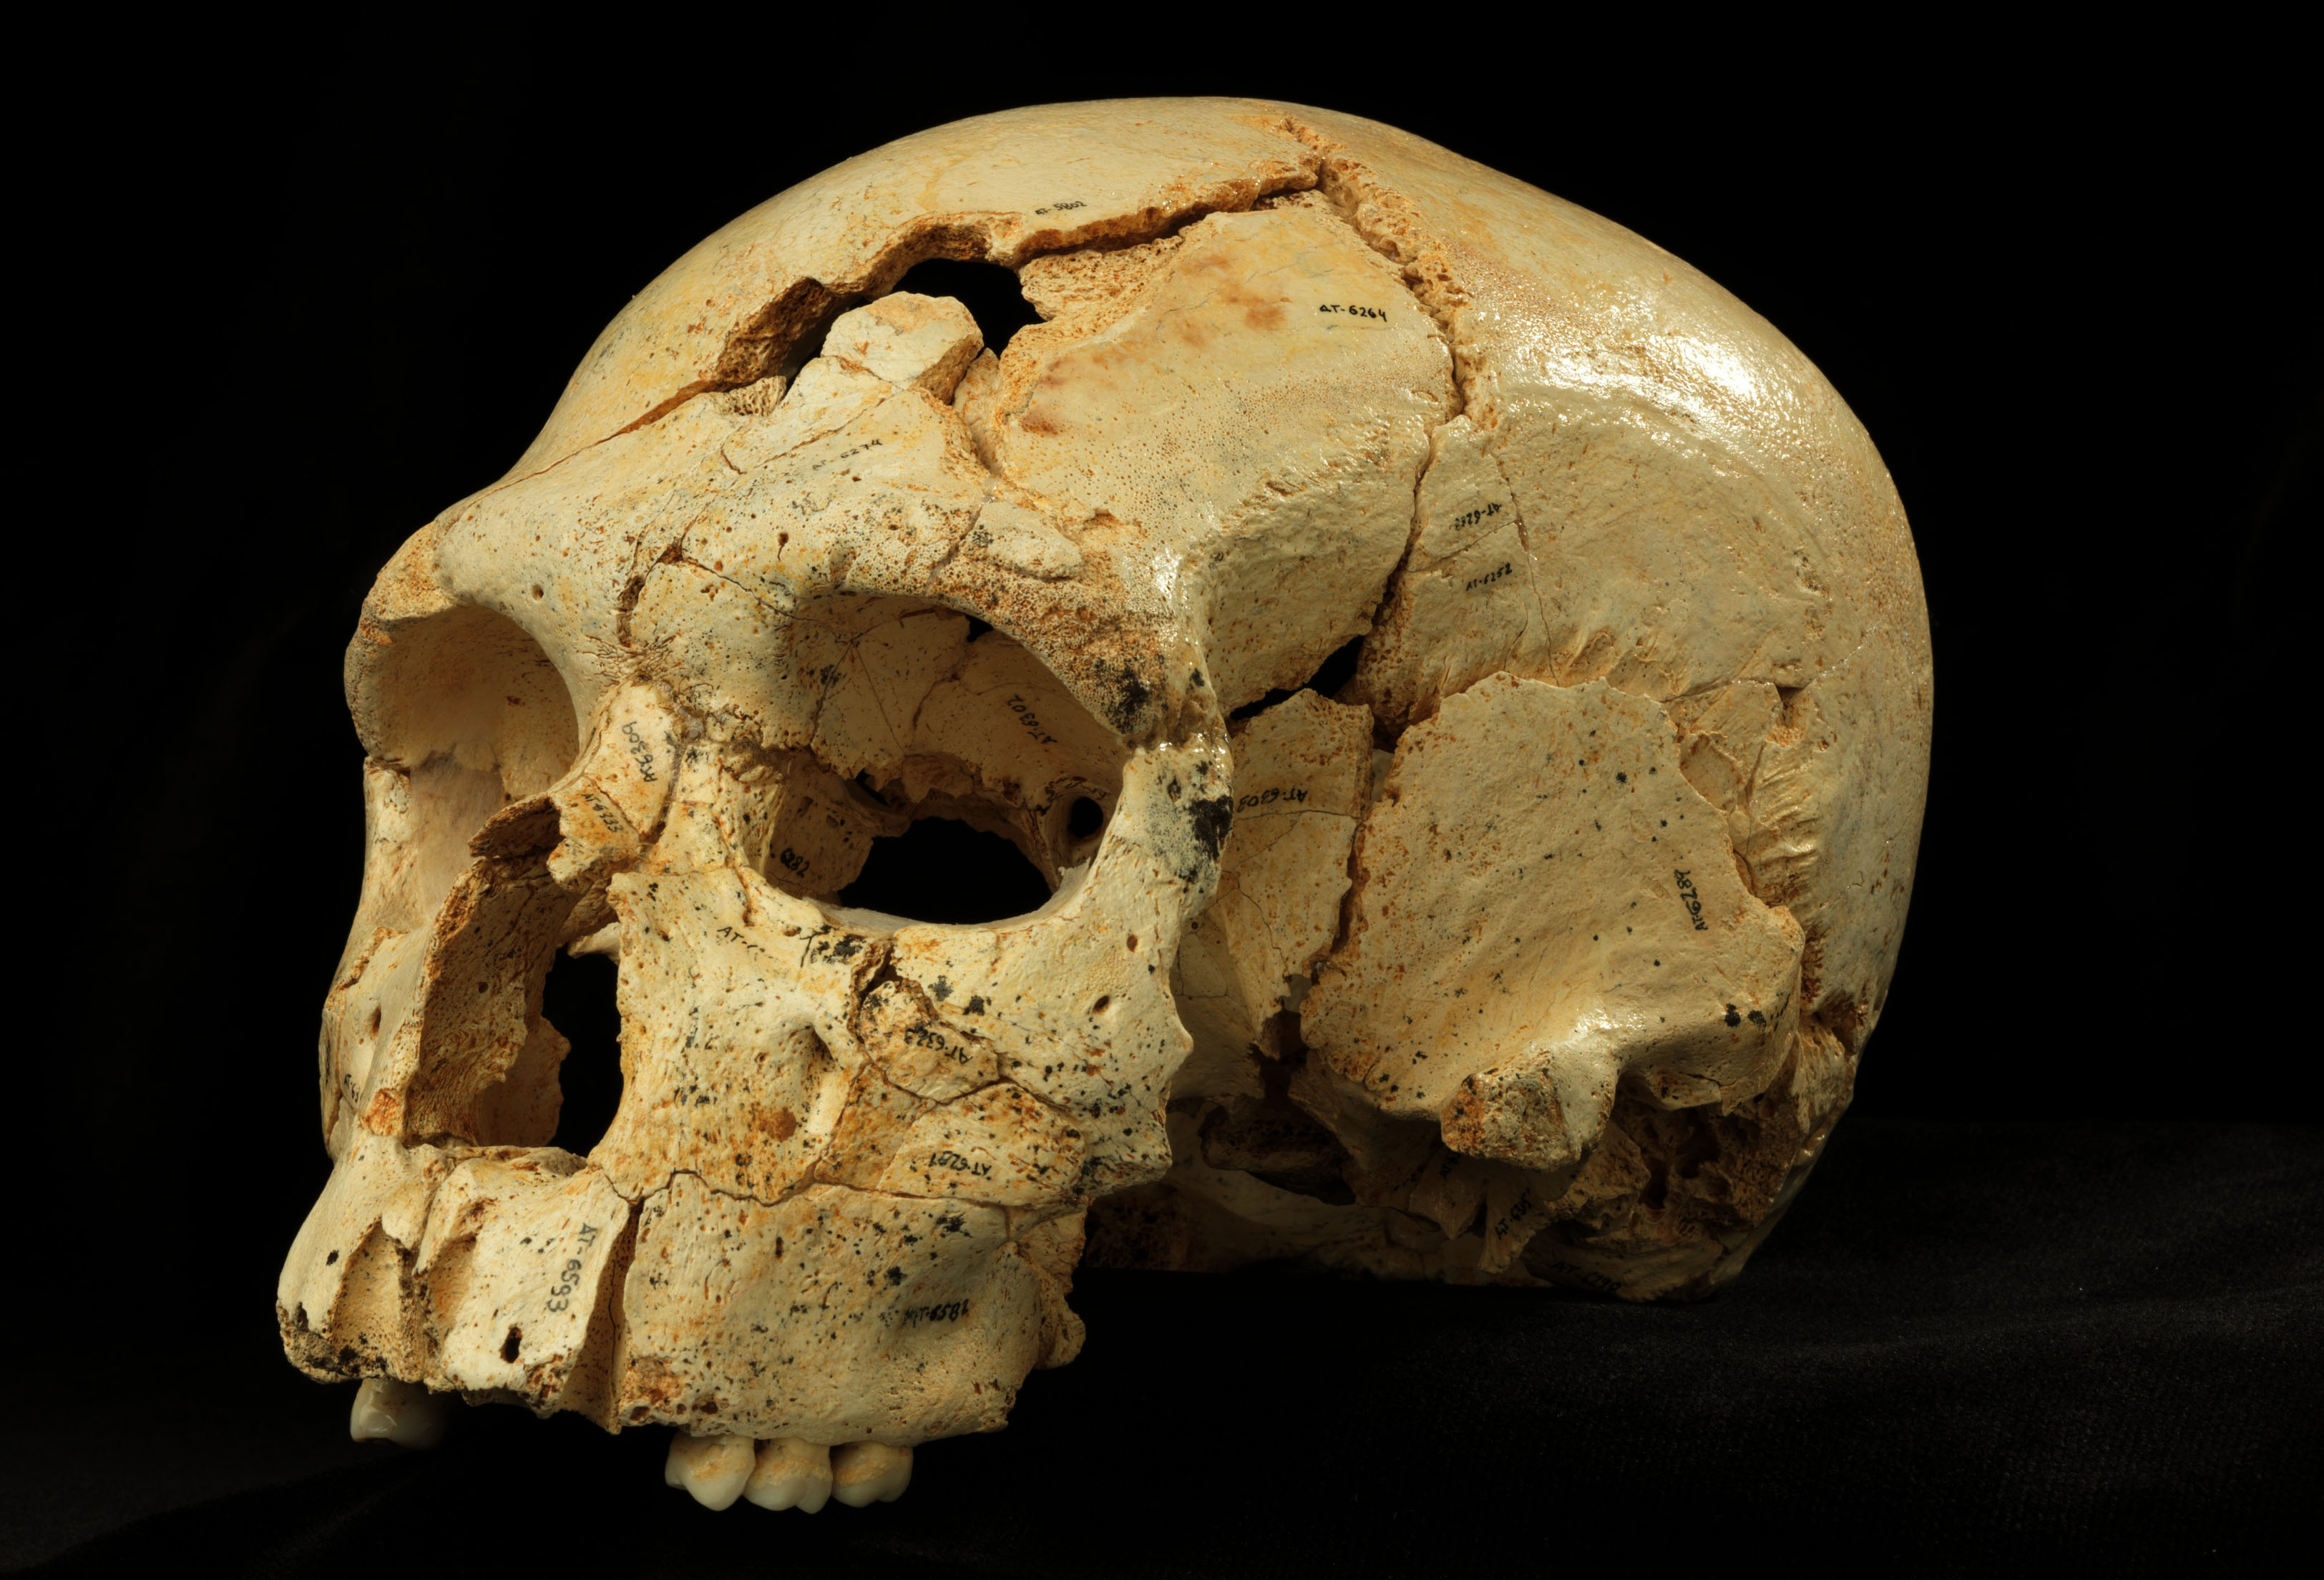 Neanderthals evolved their teeth before big brains